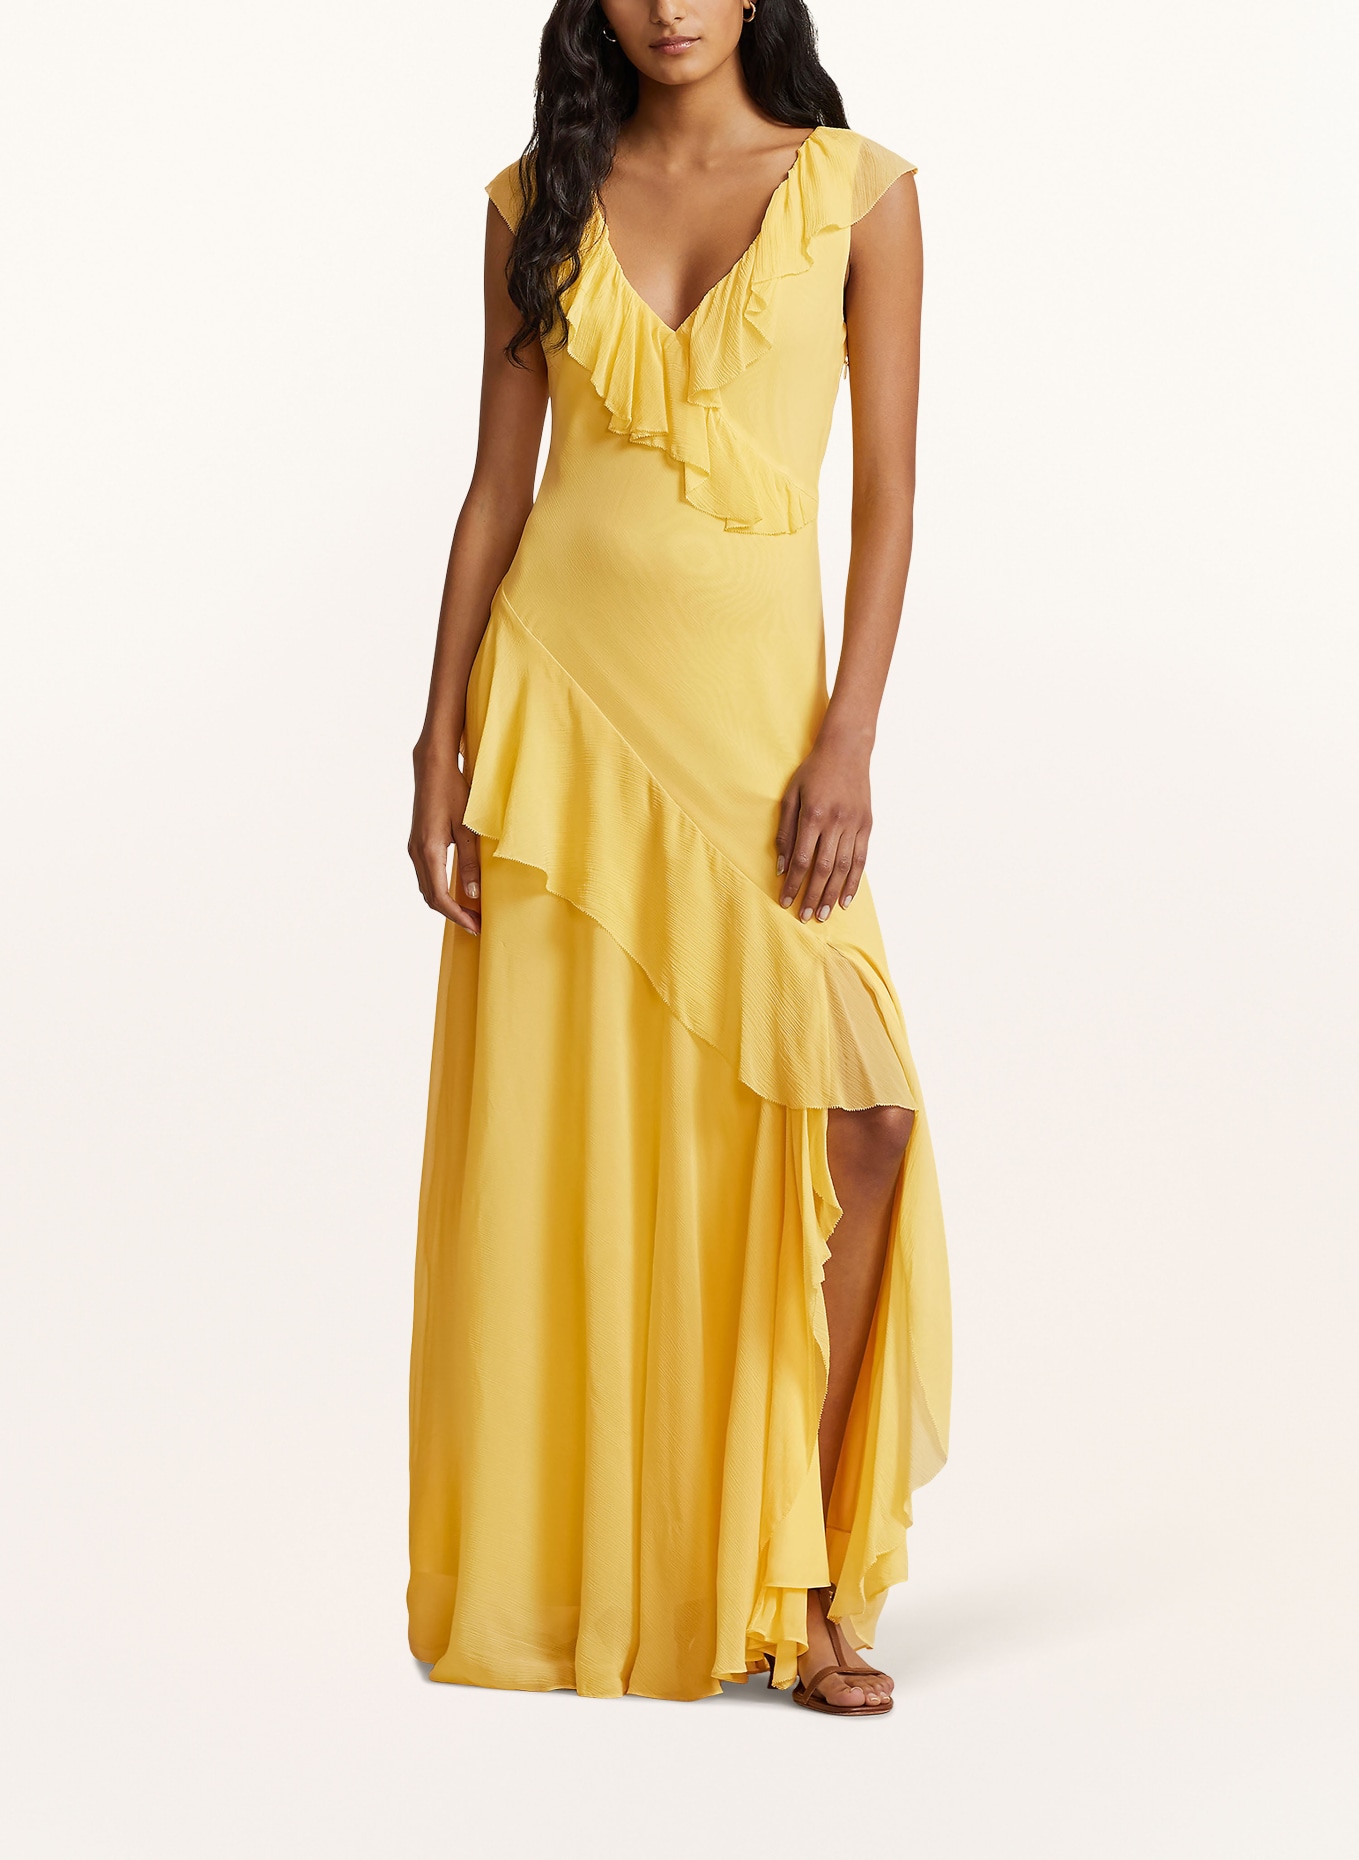 POLO Ralph Lauren Yellow Floral Cotton Maxi Dress Medium | eBay